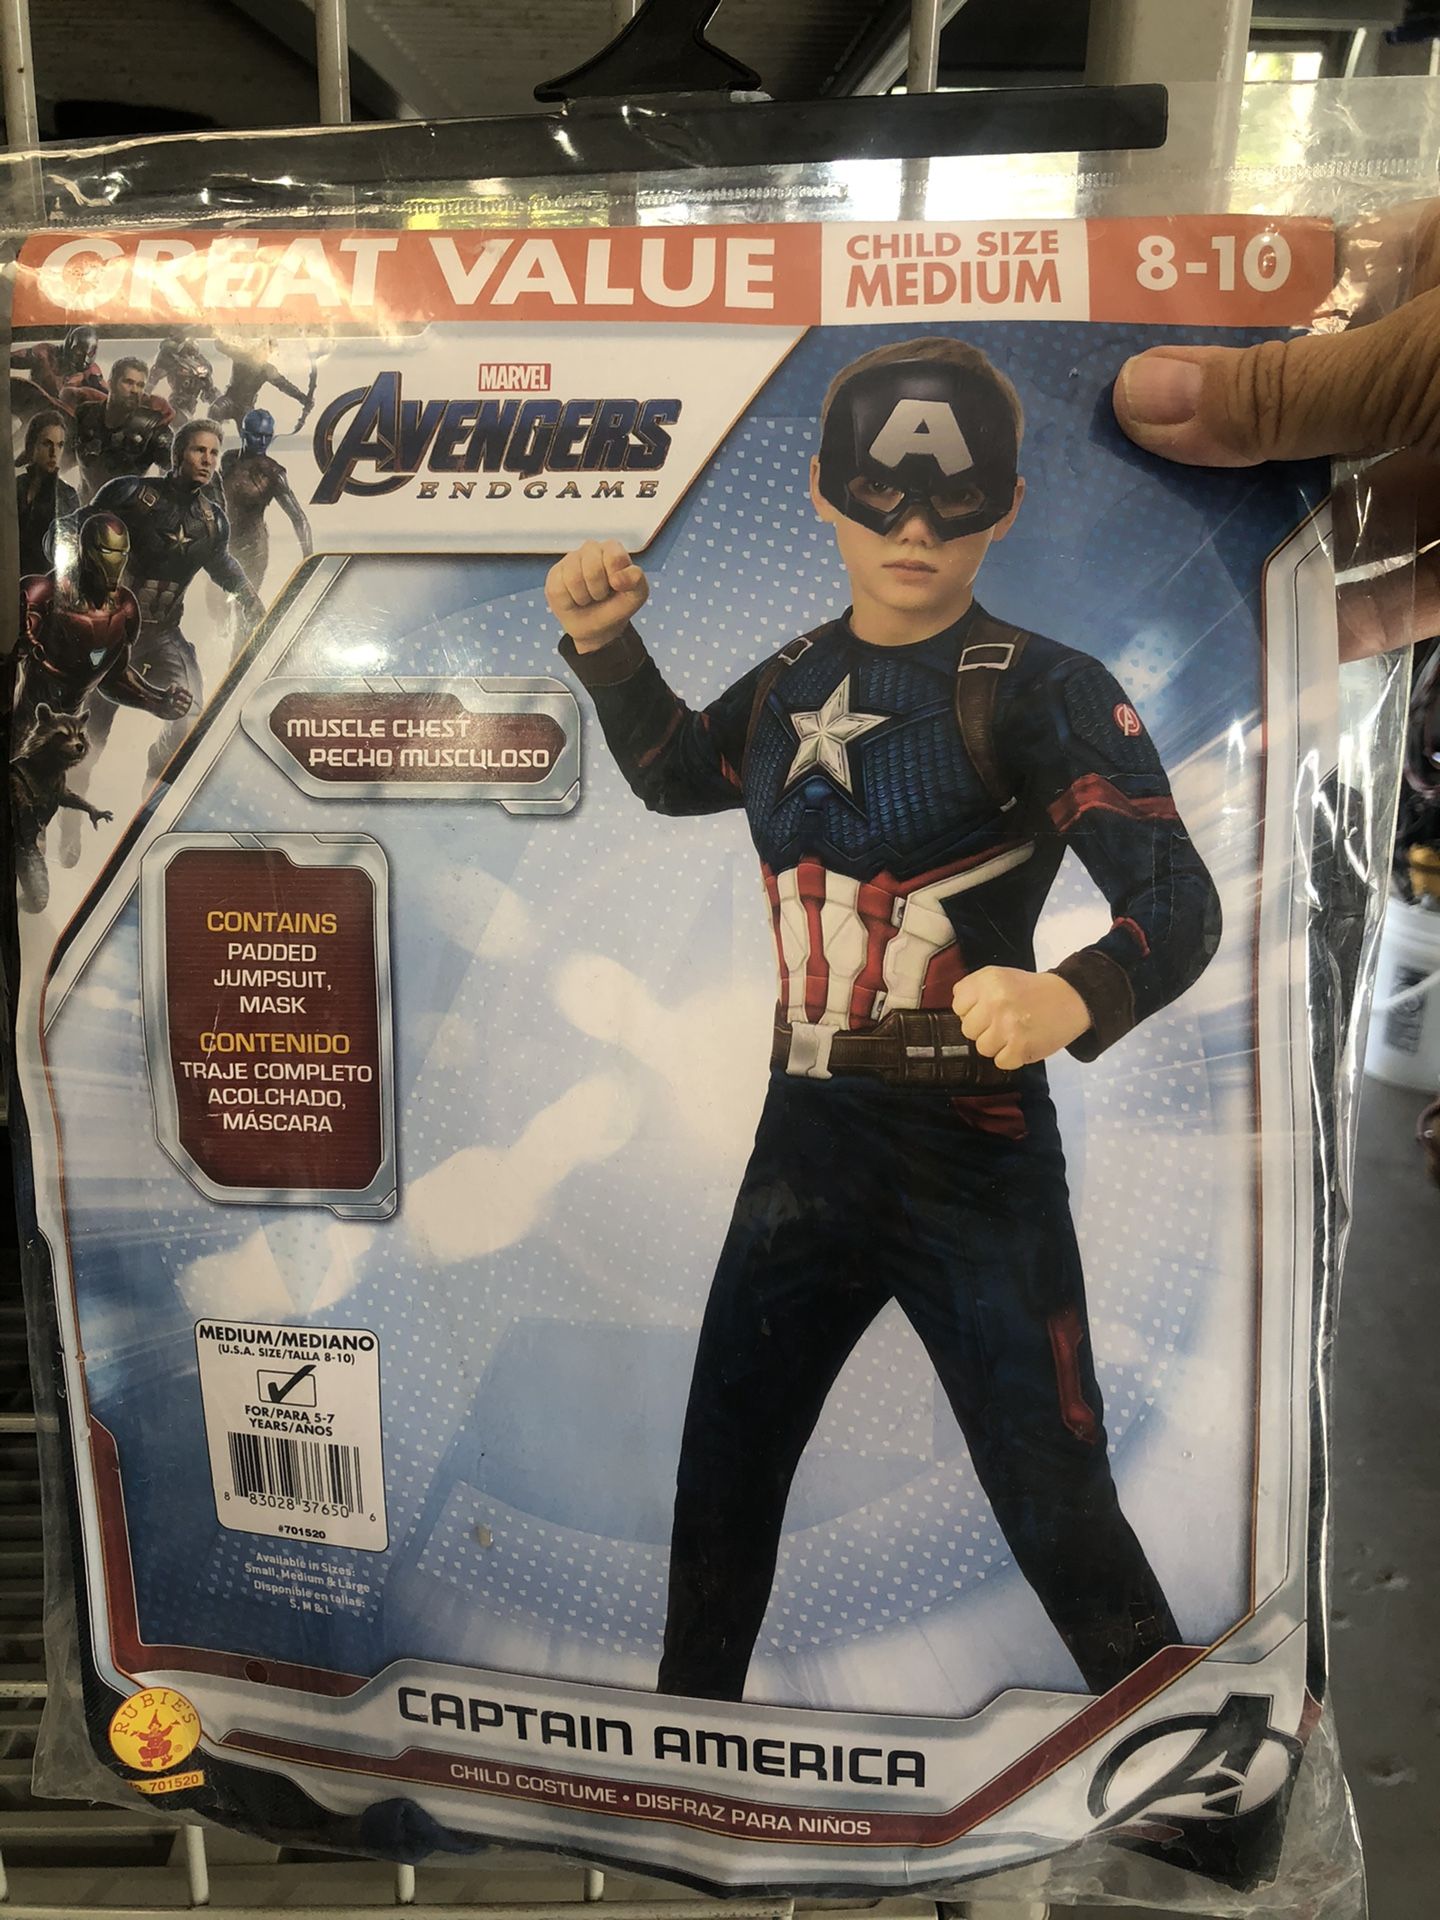 Captain America child costume size Medium 8-10 - Brand New never worn